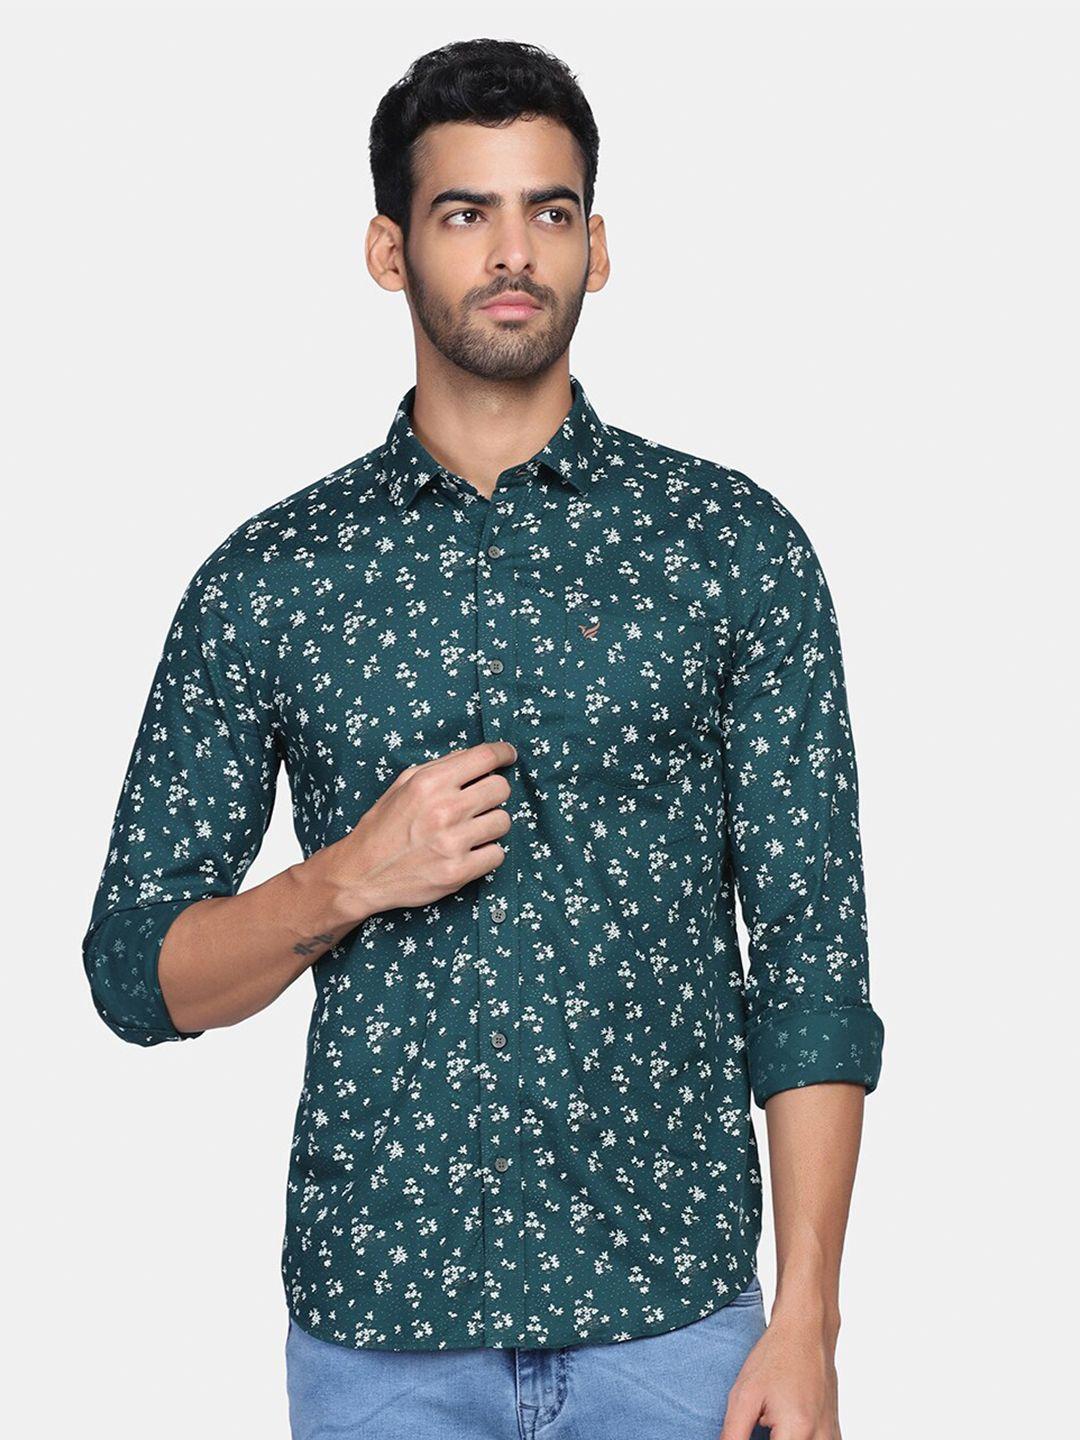 blackberrys men olive green slim fit floral printed casual shirt